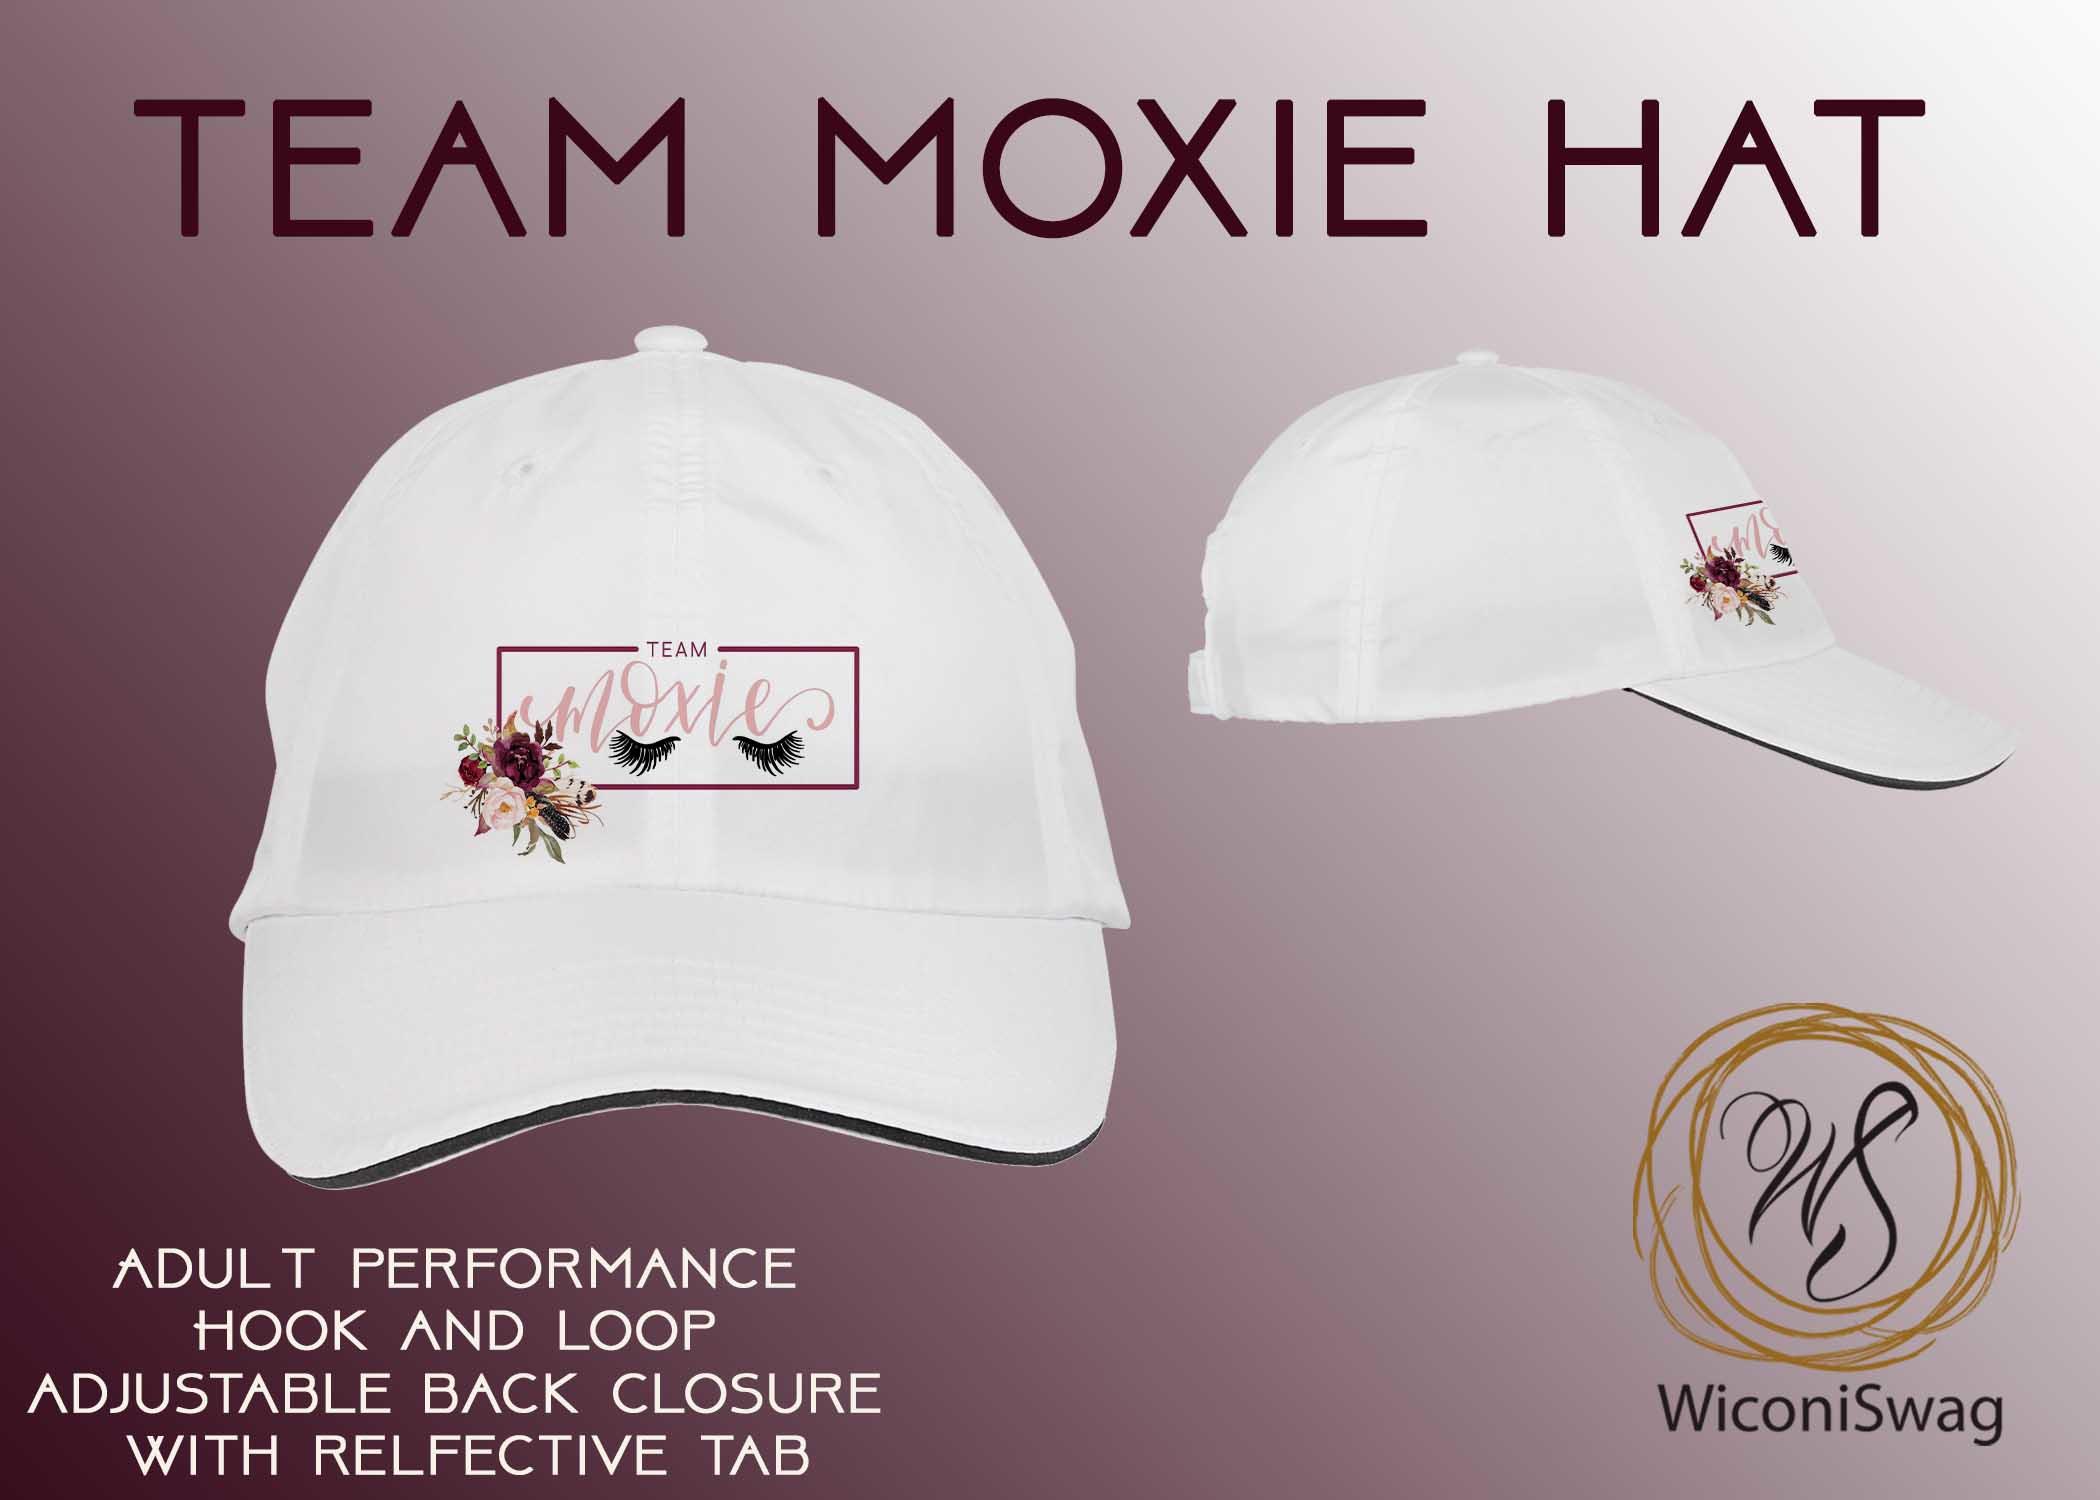 moxie hat, team gear